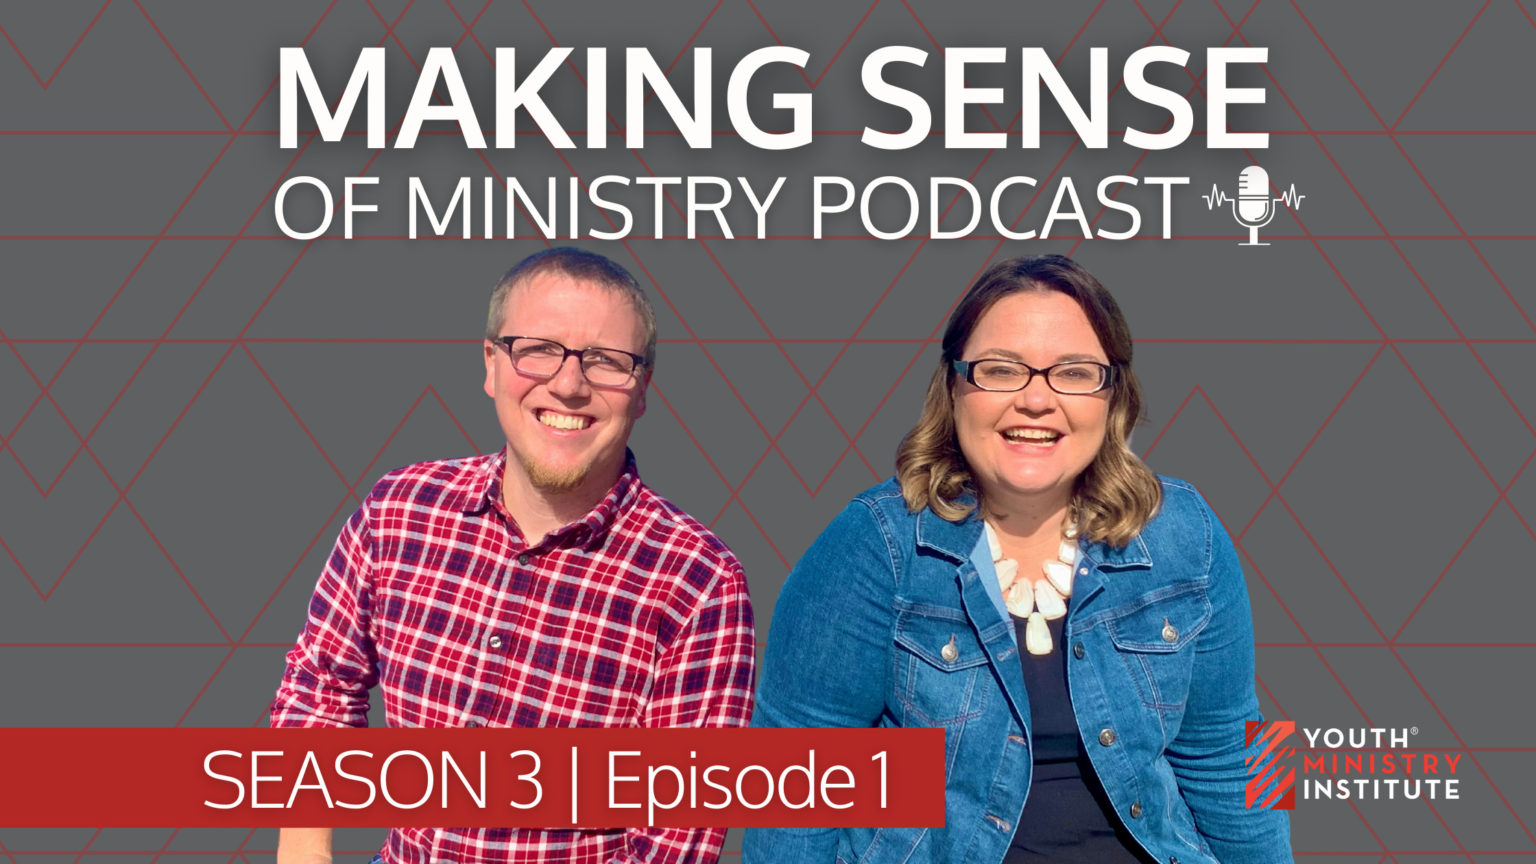 Making Sense of Ministry Podcast season 3 - episode 1